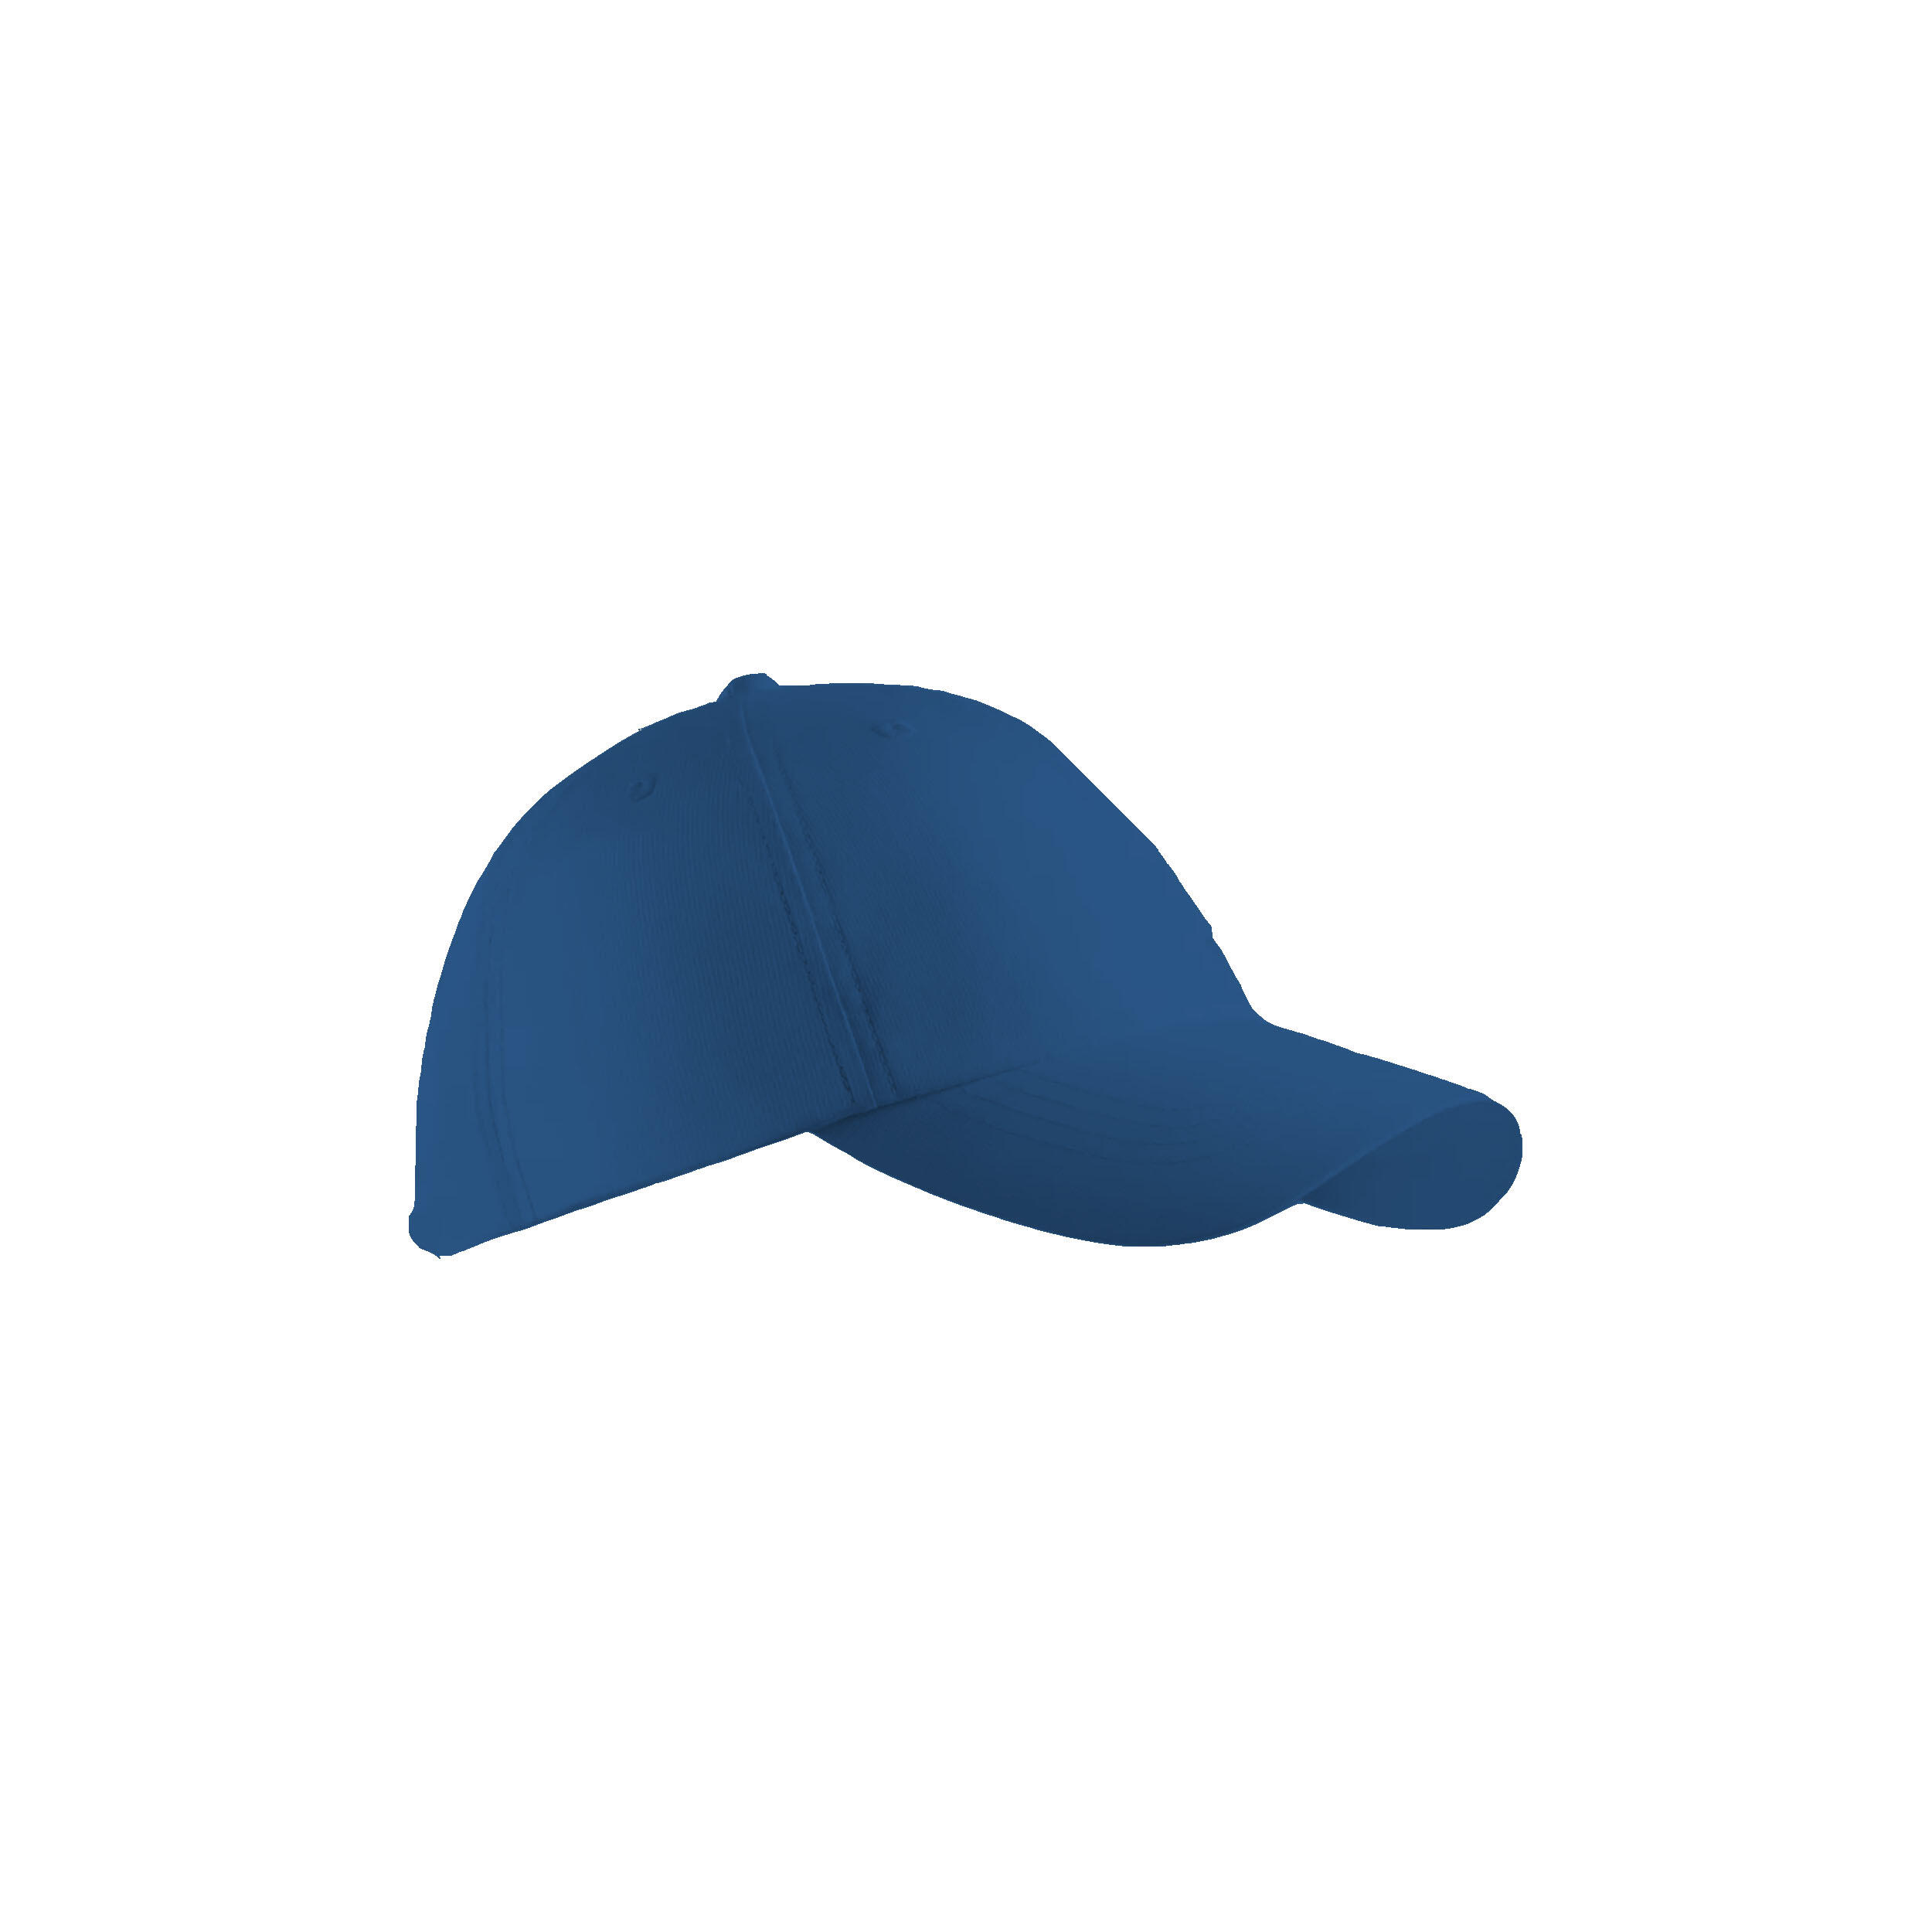 Adult's golf cap - WW 500 blue - UNIQUE By INESIS | Decathlon